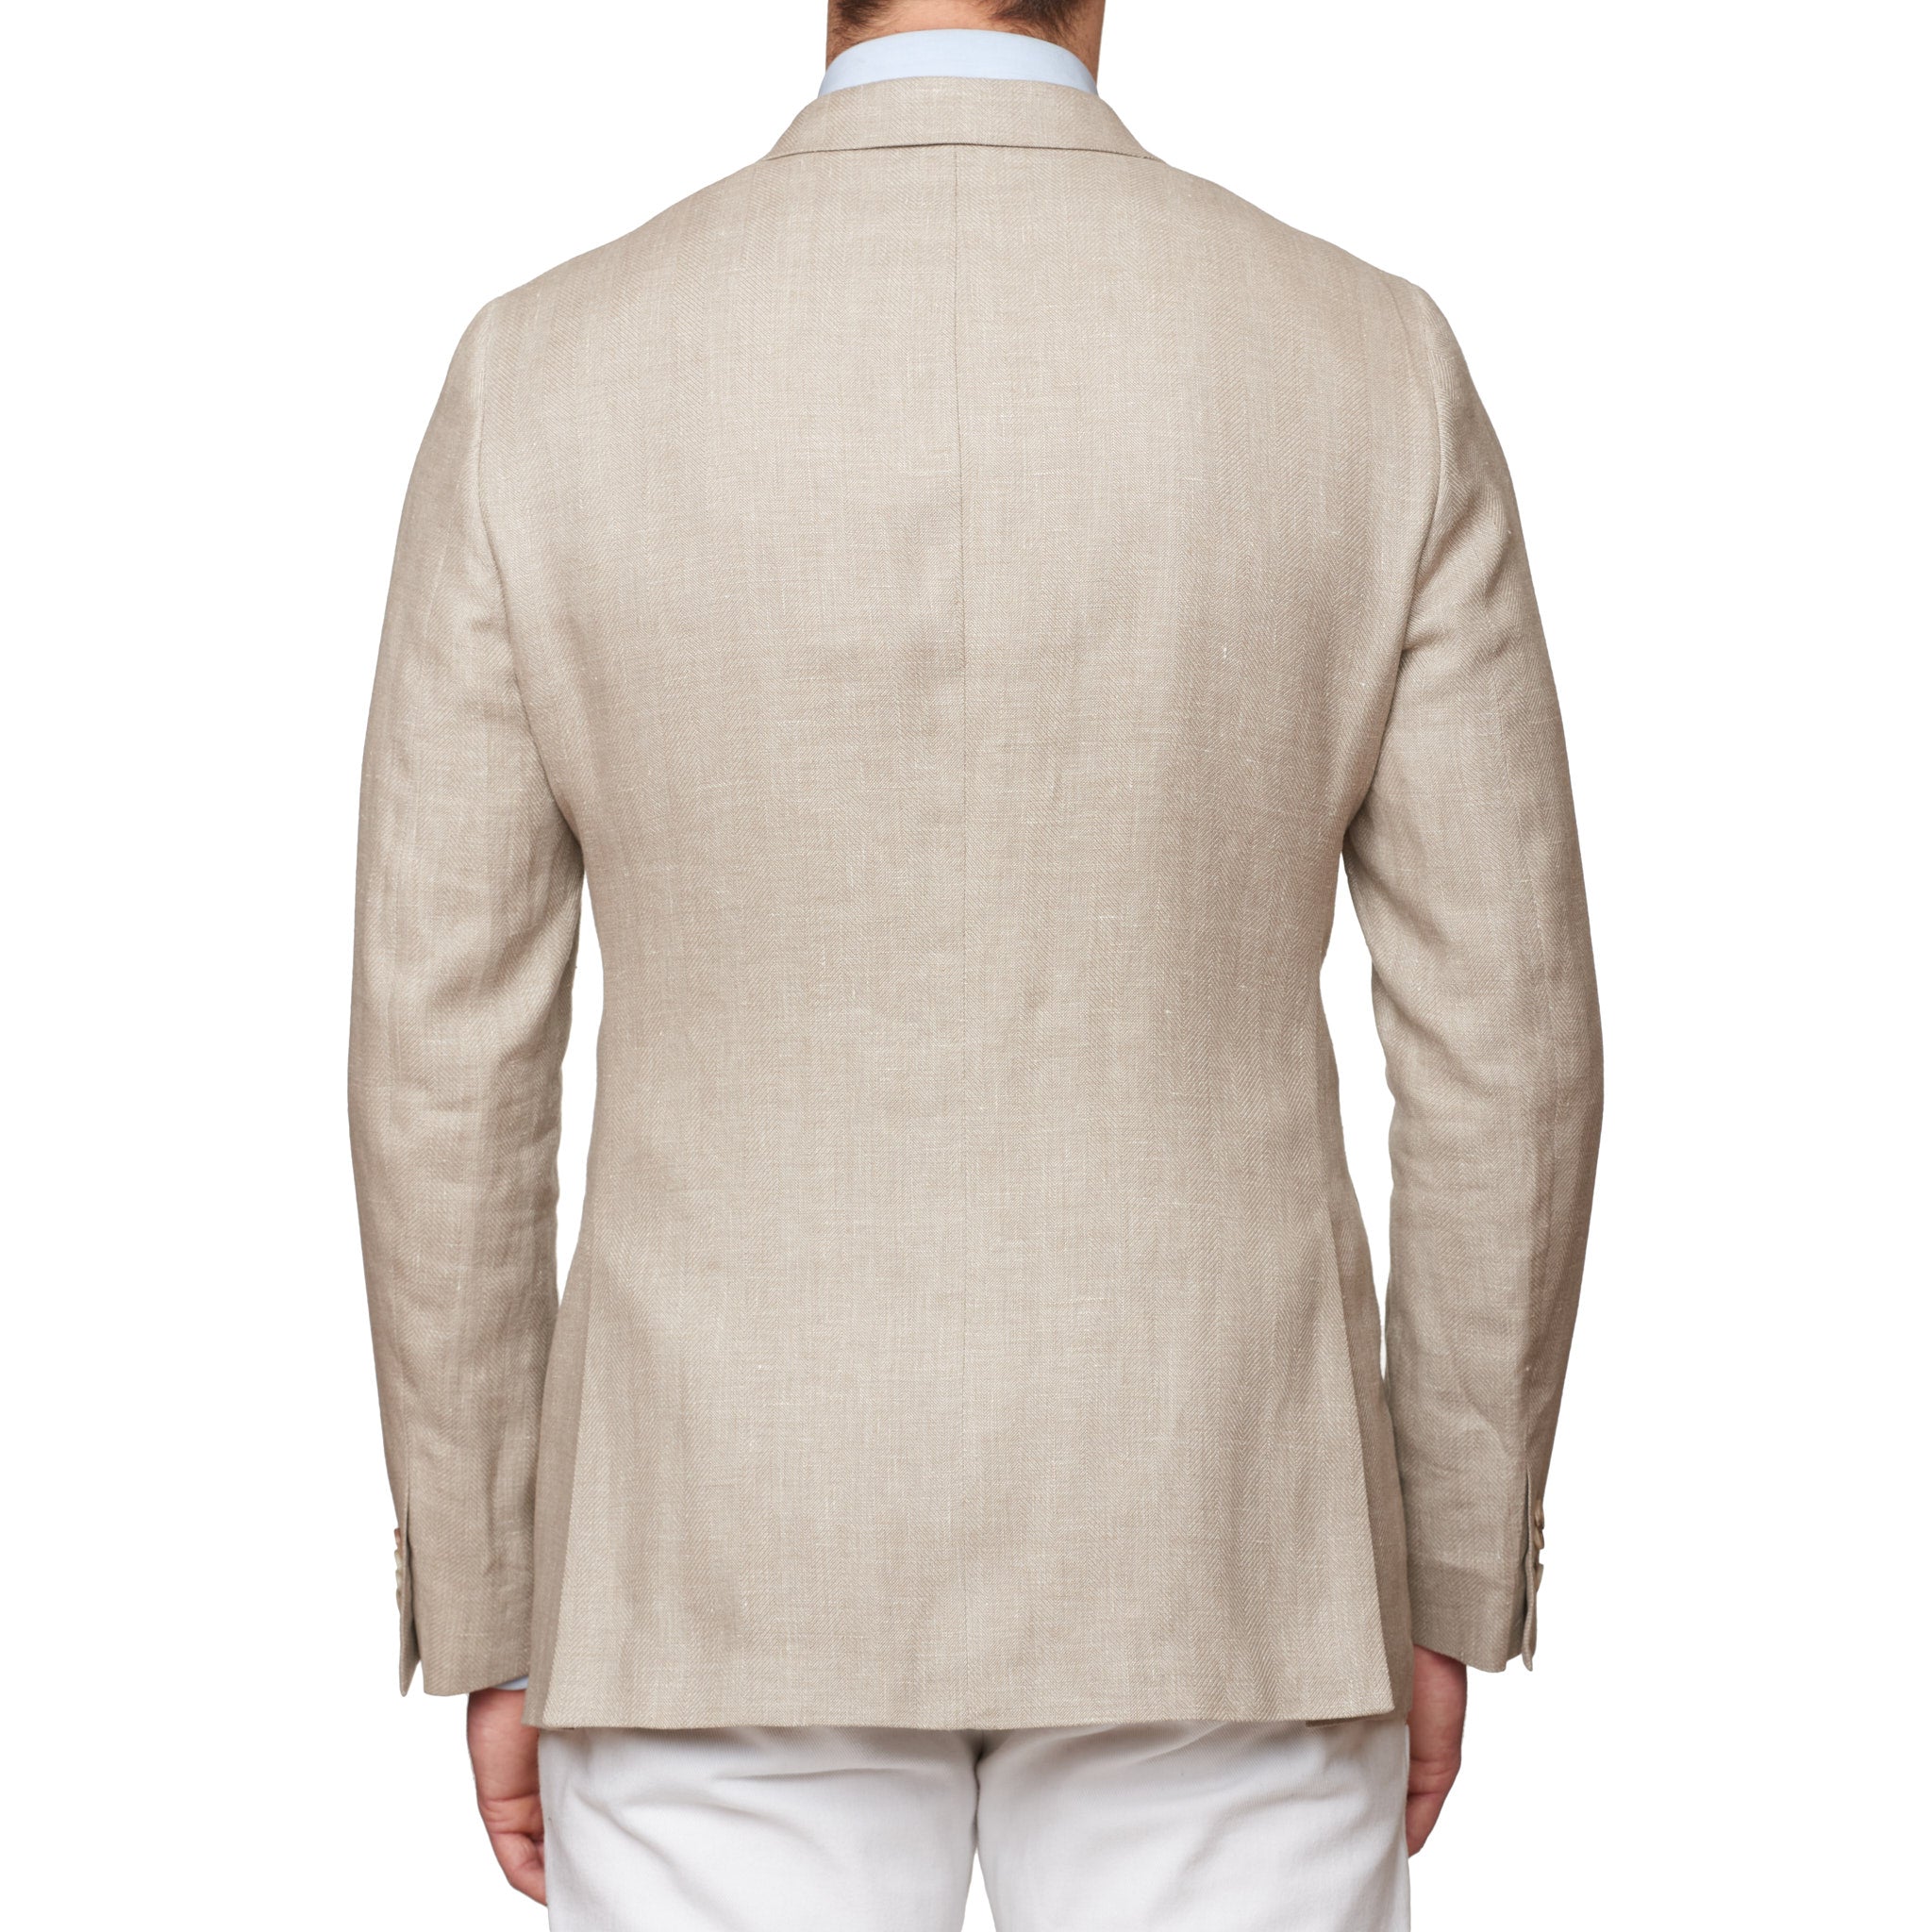 BOGLIOLI Milano "SFORZA" Sand Beige Herringbone Linen-Wool Jacket 54 NEW US 44